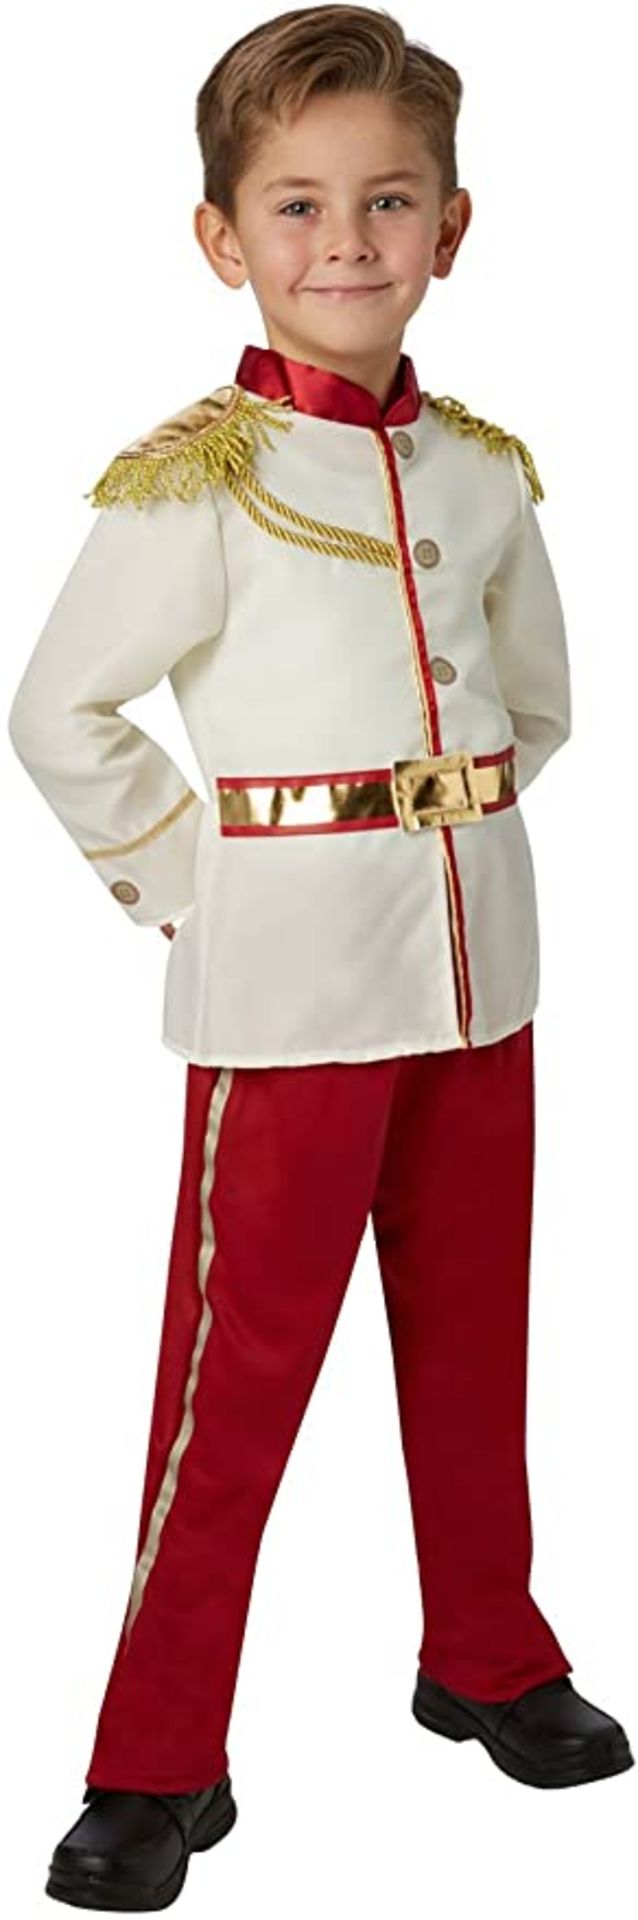 RRP - £19.39 Rubie's Official Disney Prince Charming Boys Costume - Medium 5-6 years, White